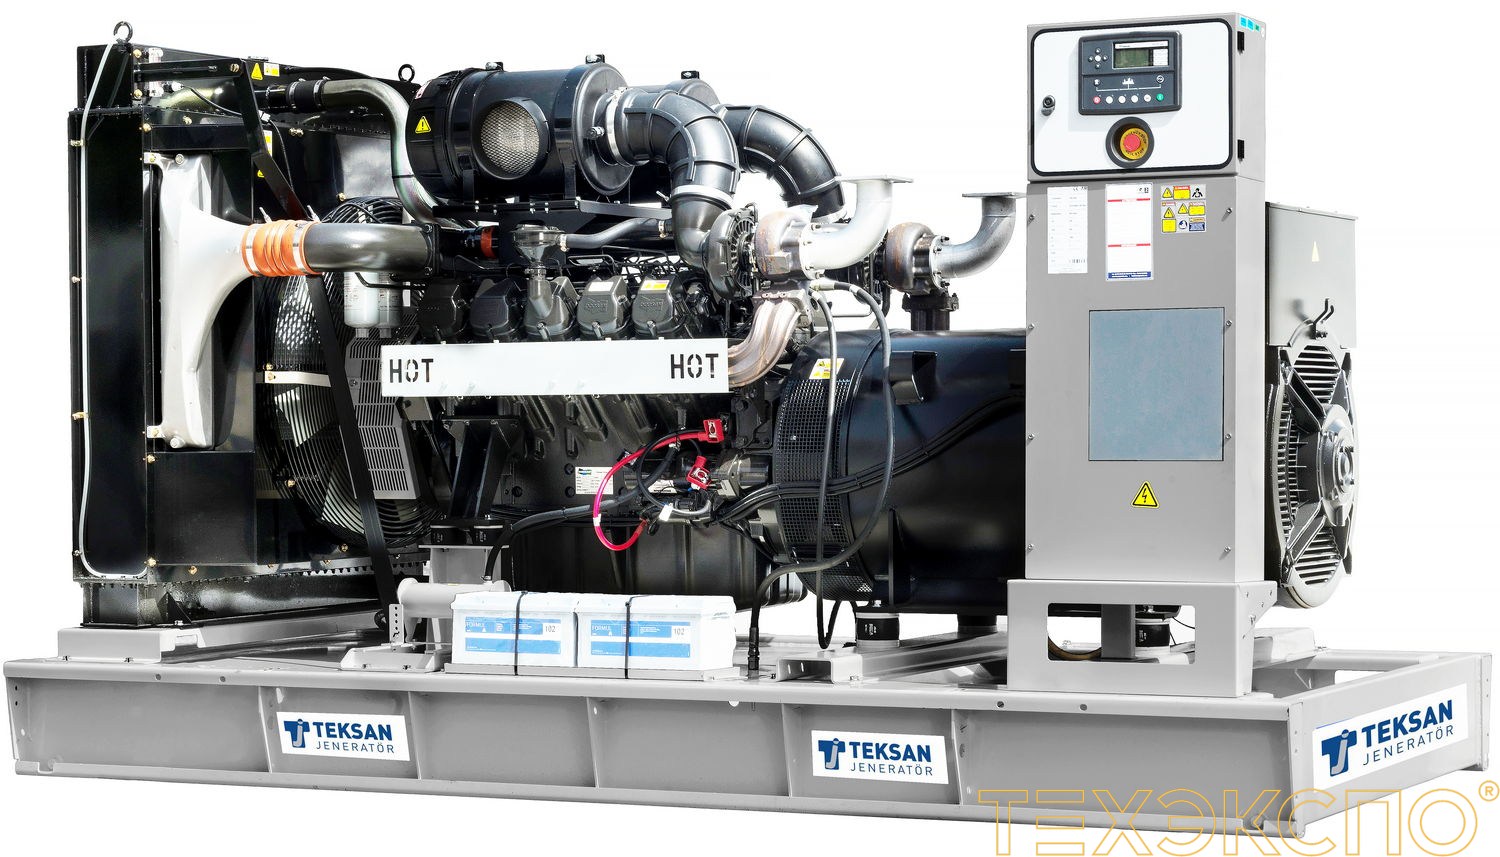 Teksan TJ704DW5C - ДЭС 510 кВт в Санкт-Петербурге за 4 851 456 рублей | Дизельная электростанция в Техэкспо